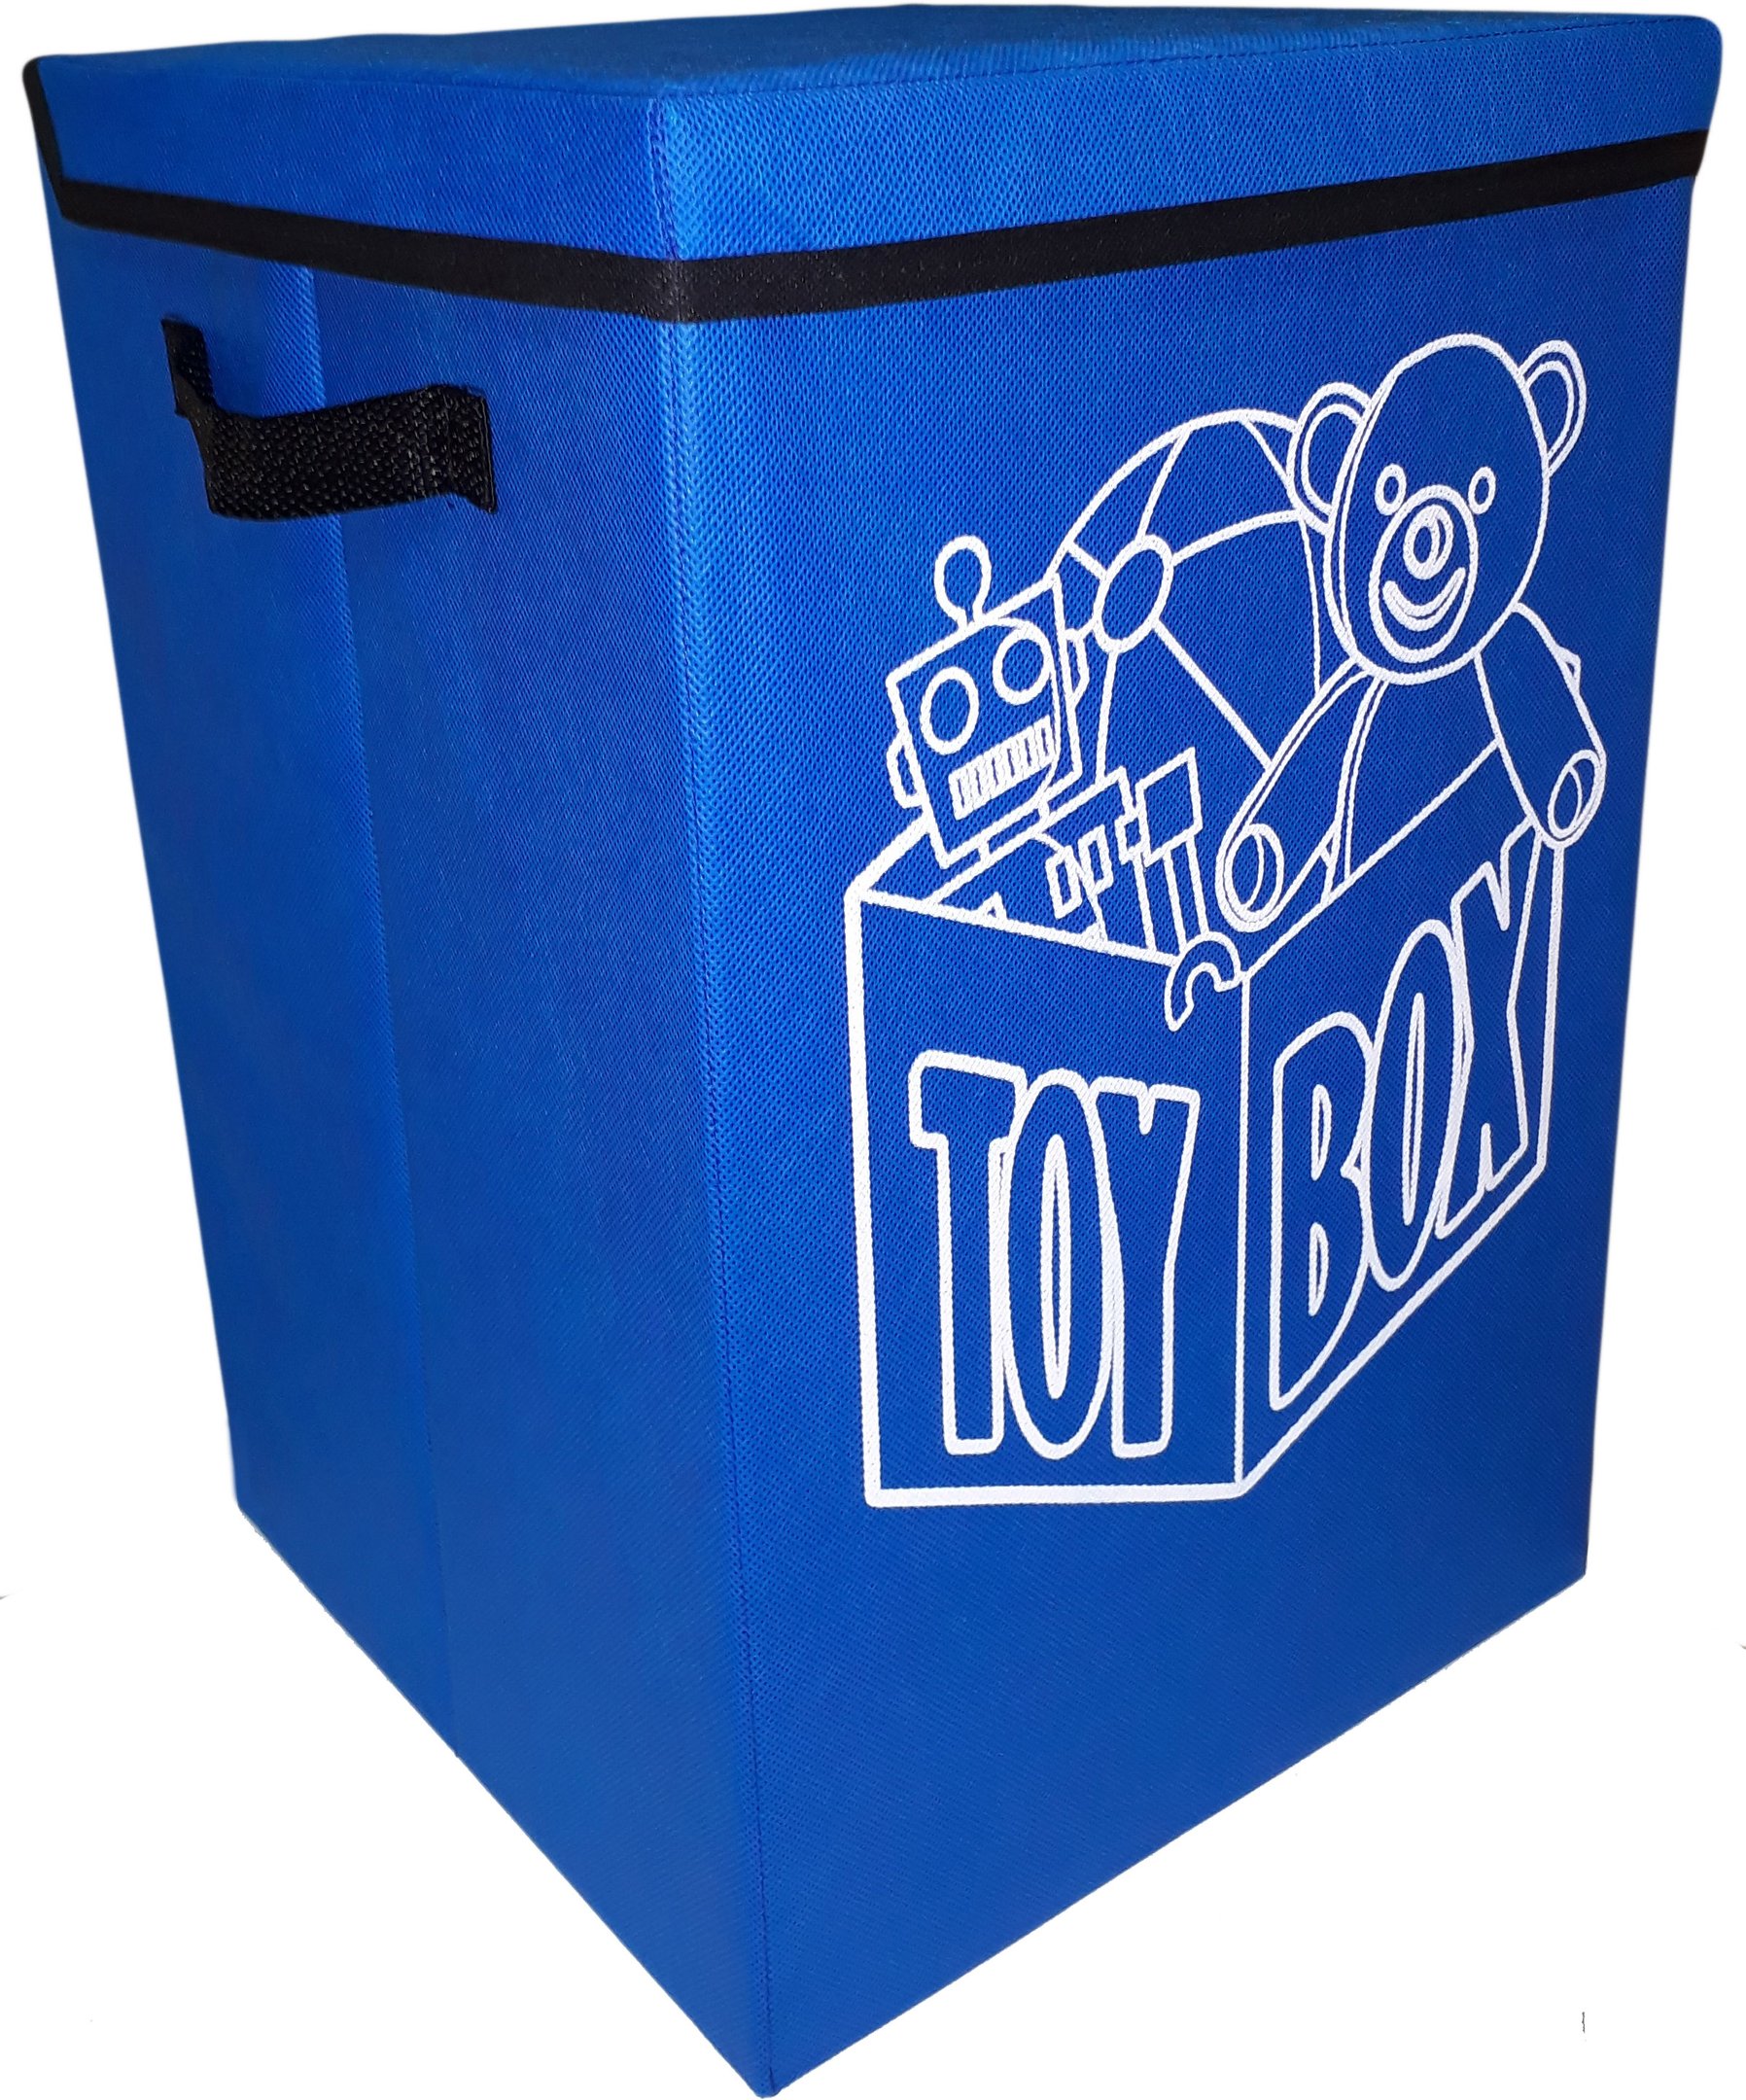 Cesto Porta Brinquedo, Caixa De Brinquedo - Azul - 1